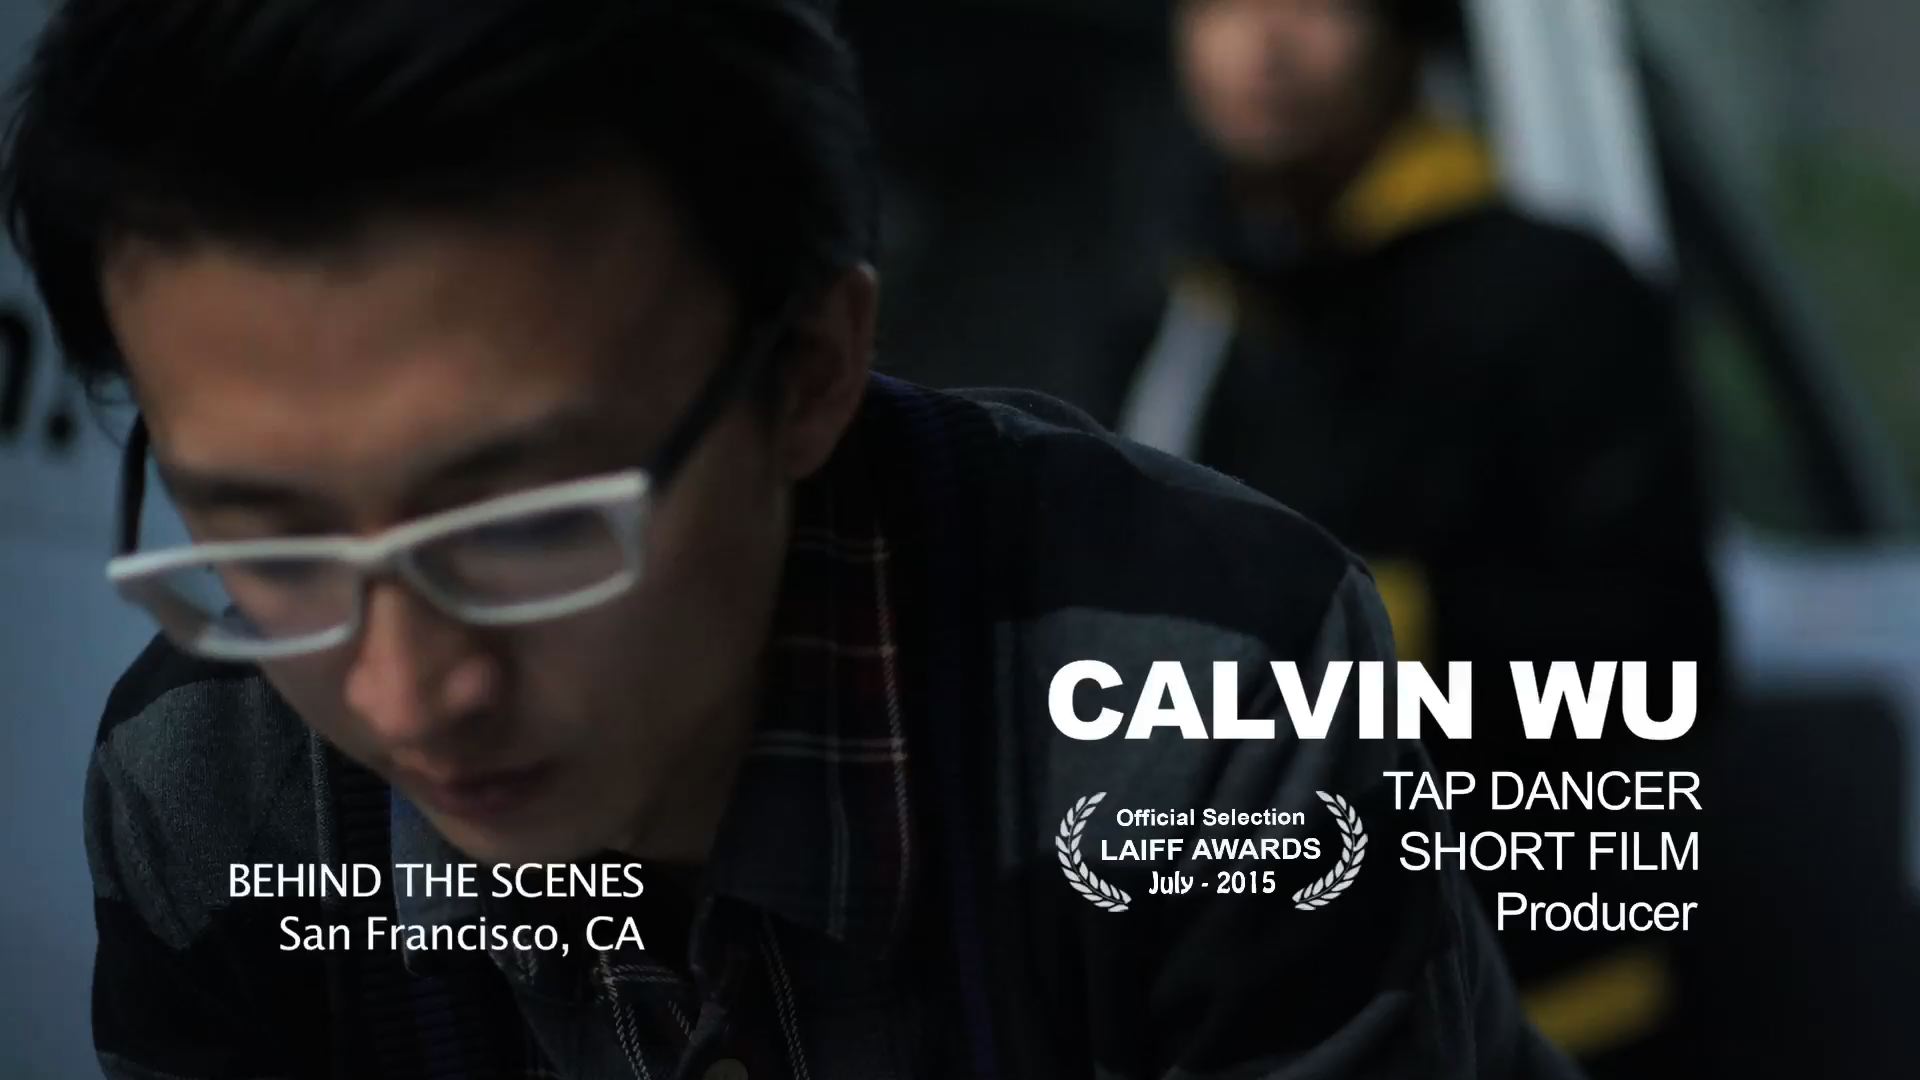 Producer, Calvin Wu